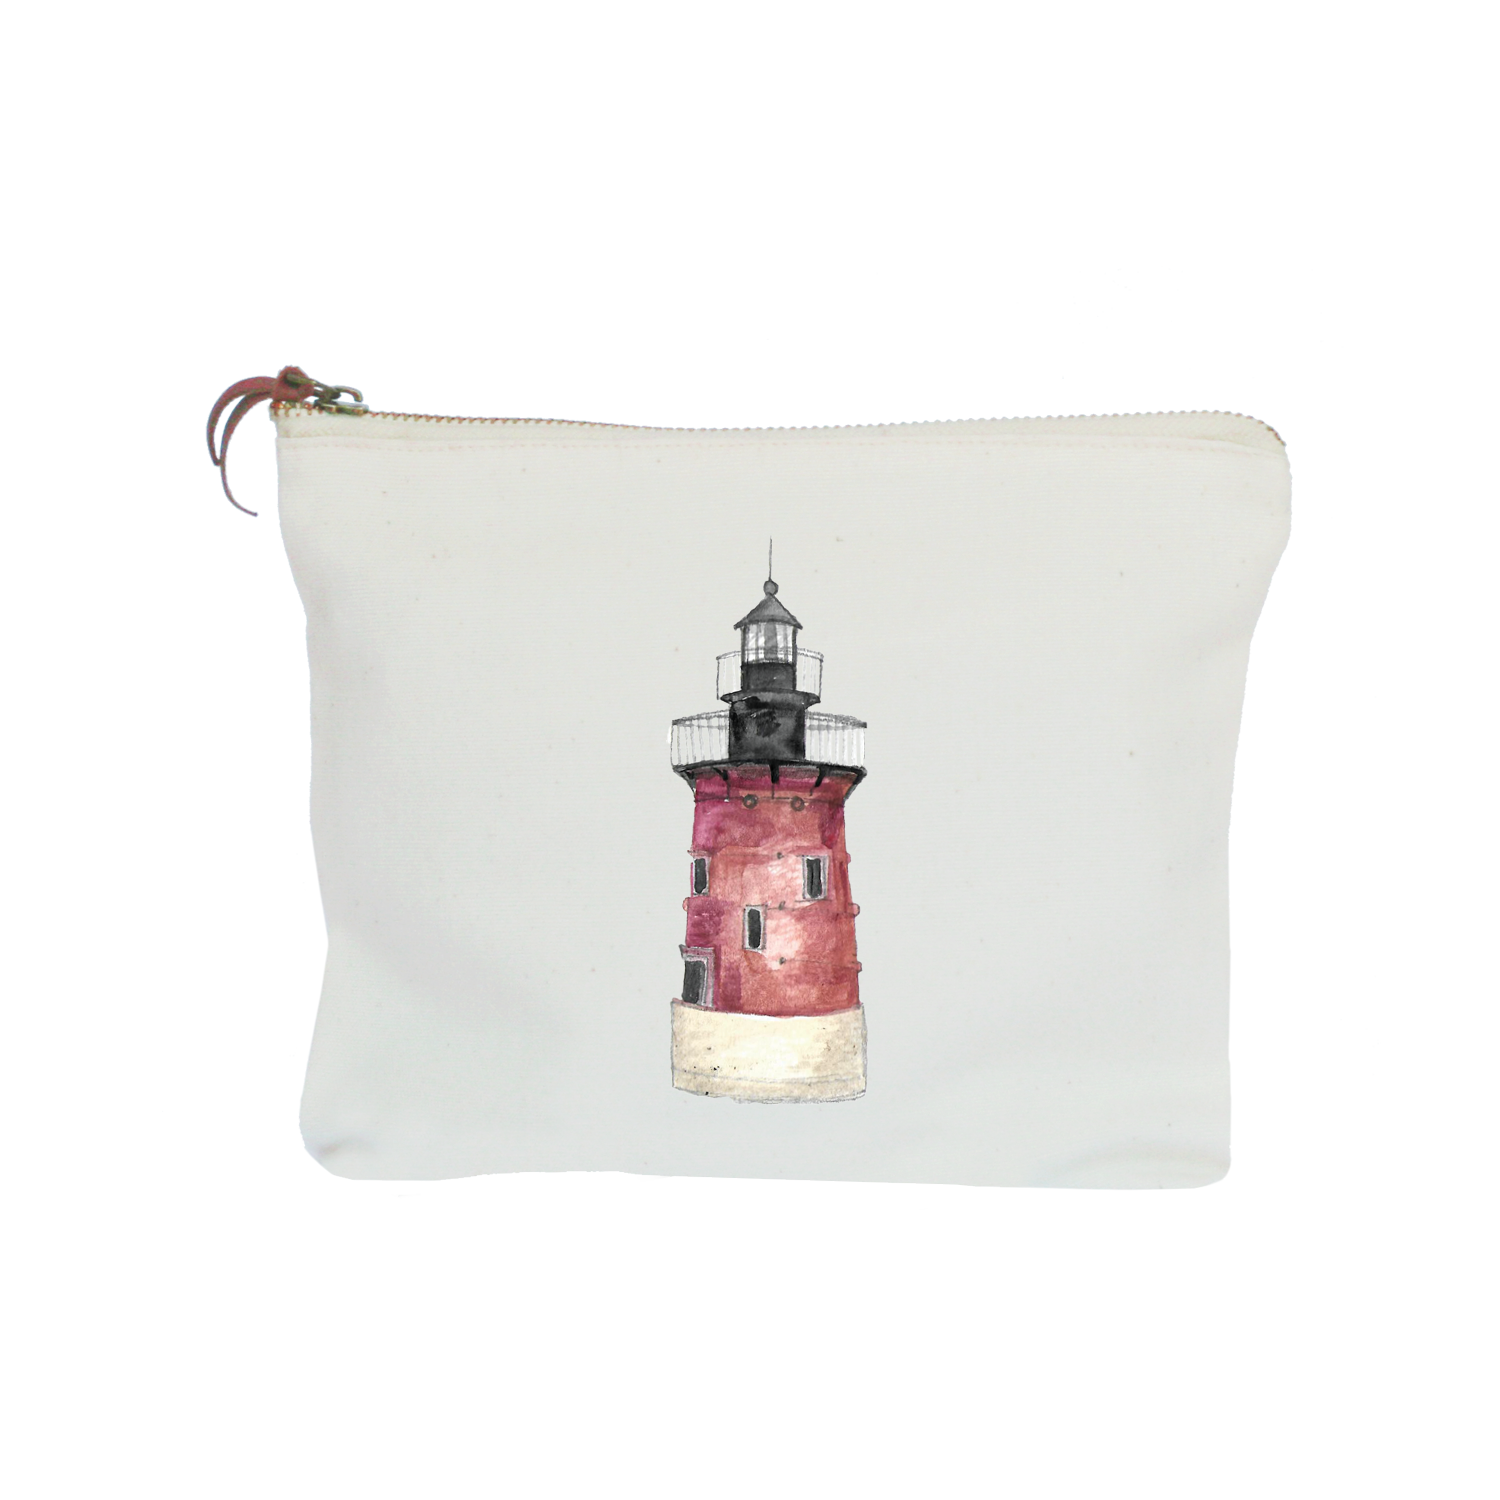 lewes lighthouse zipper pouch